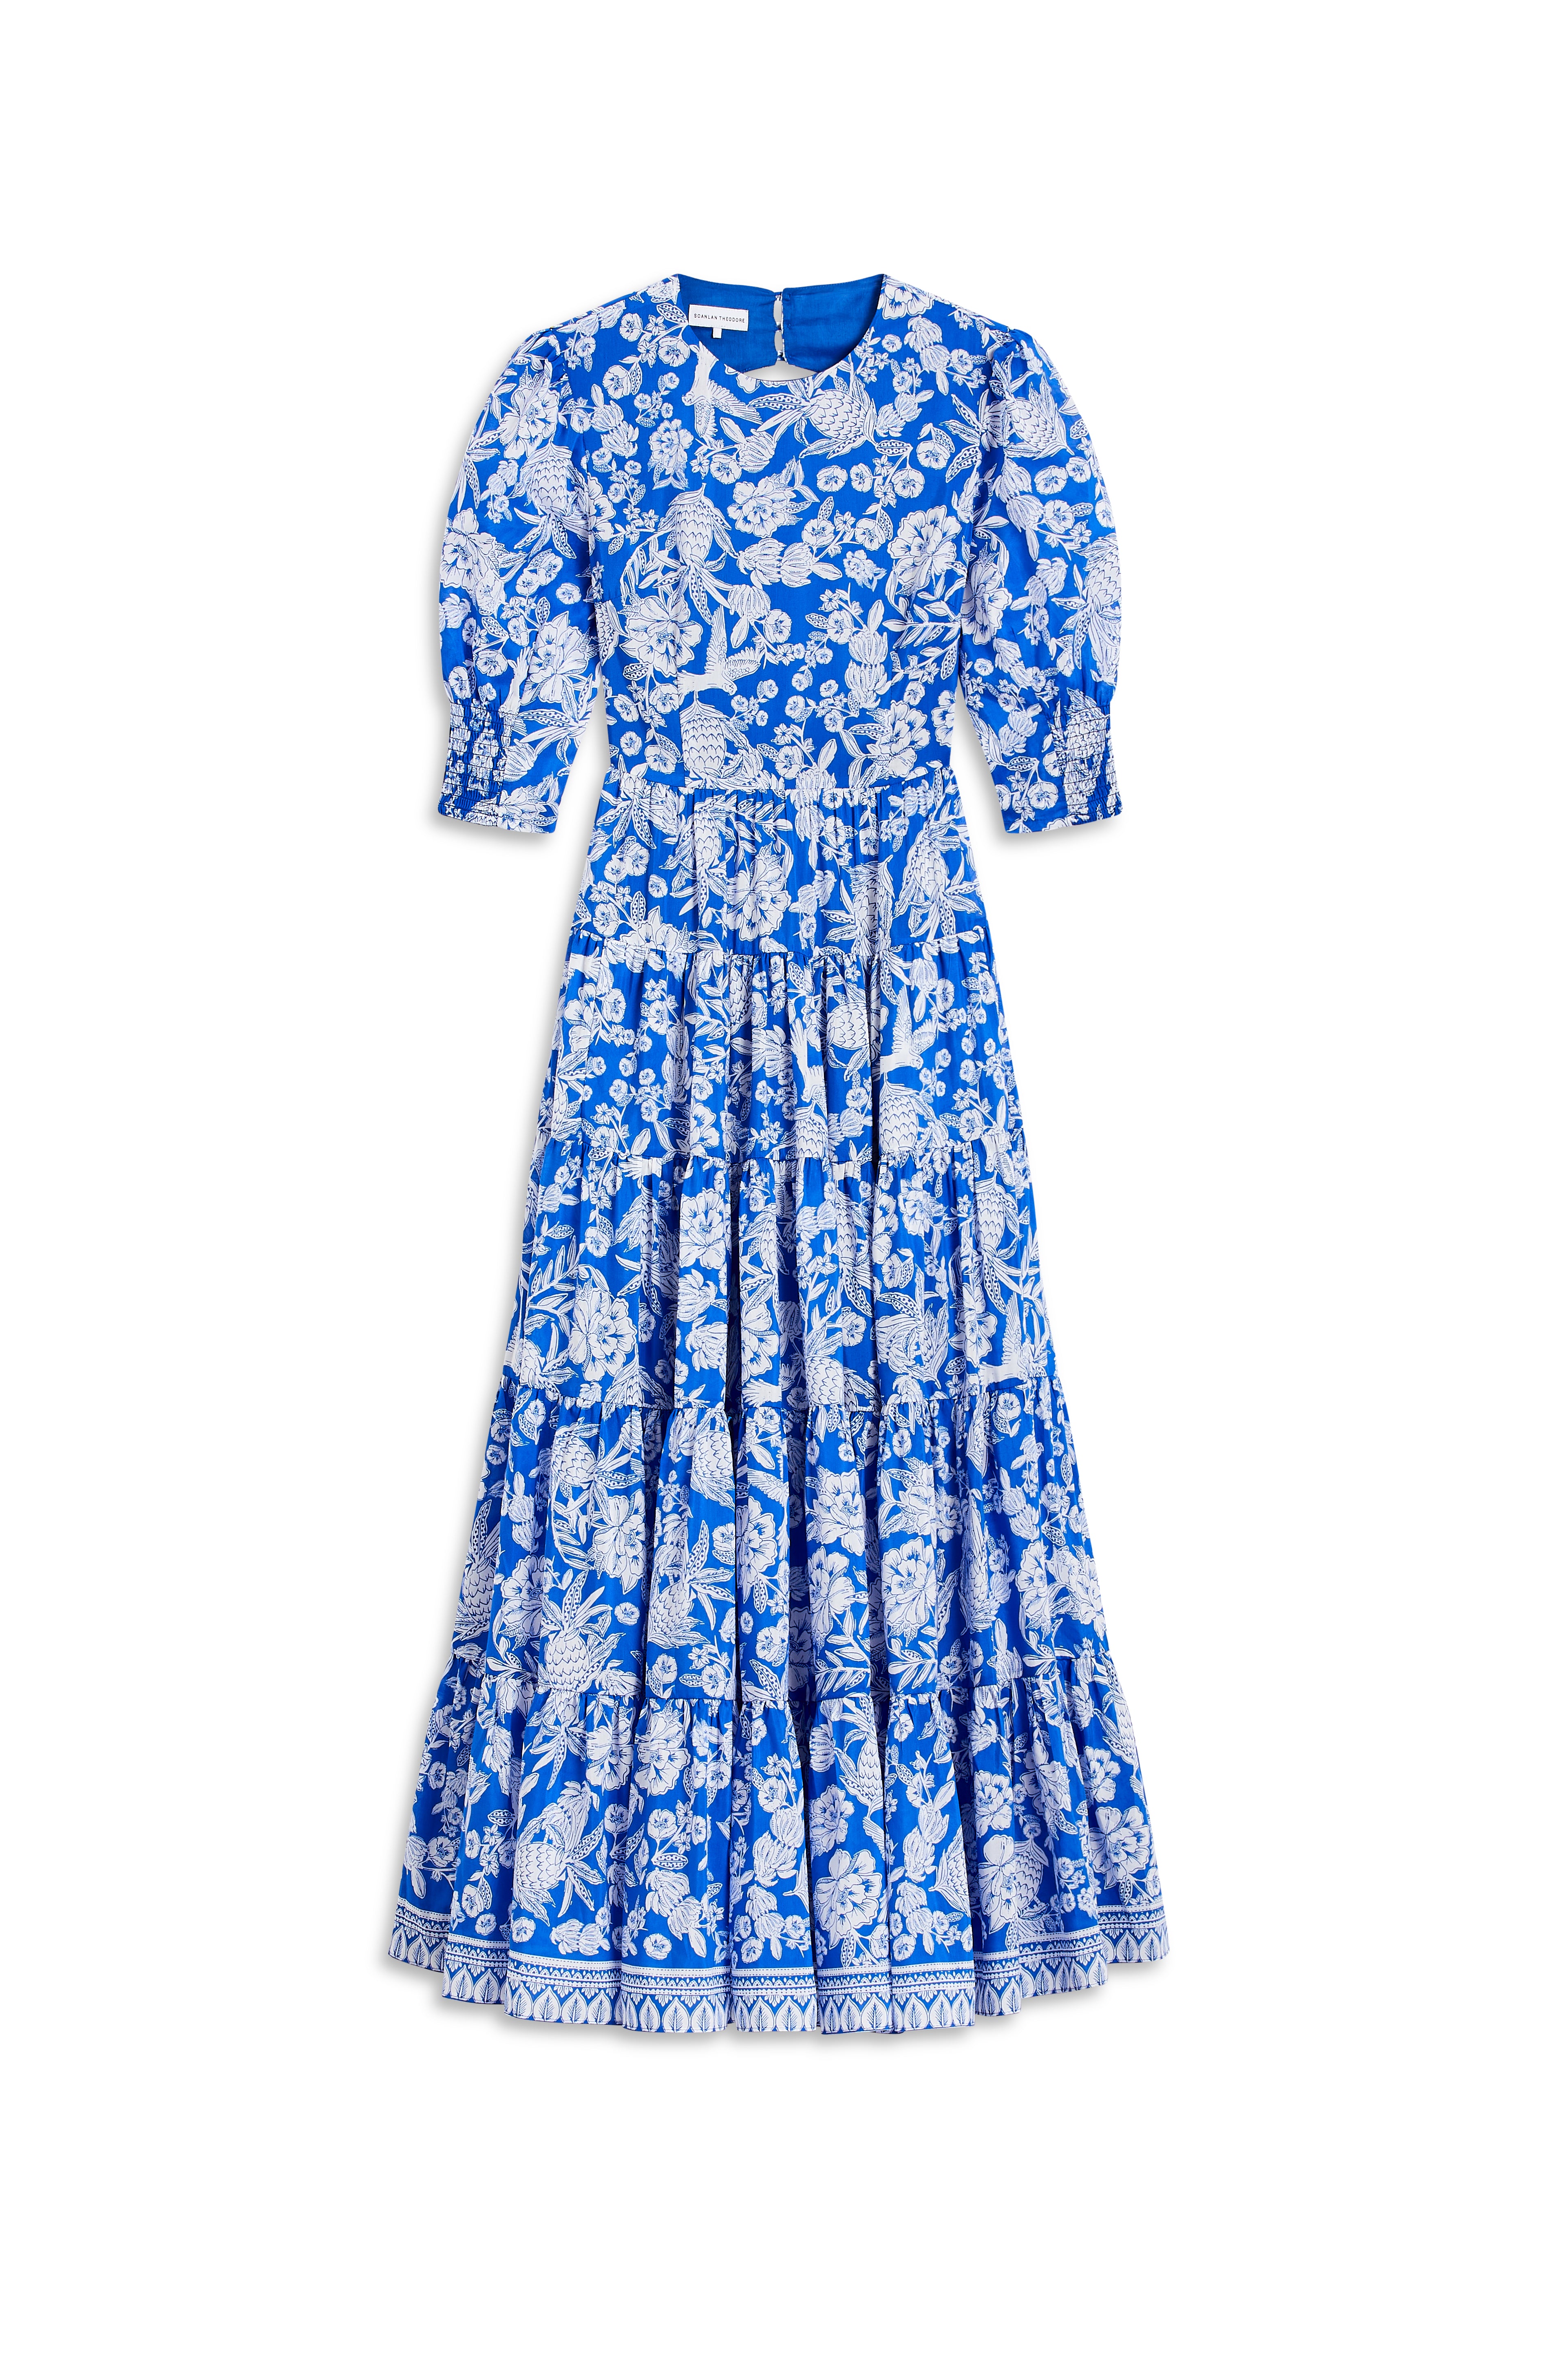 LINEN FLORAL PRINT DRESS - BLUE - Scanlan Theodore